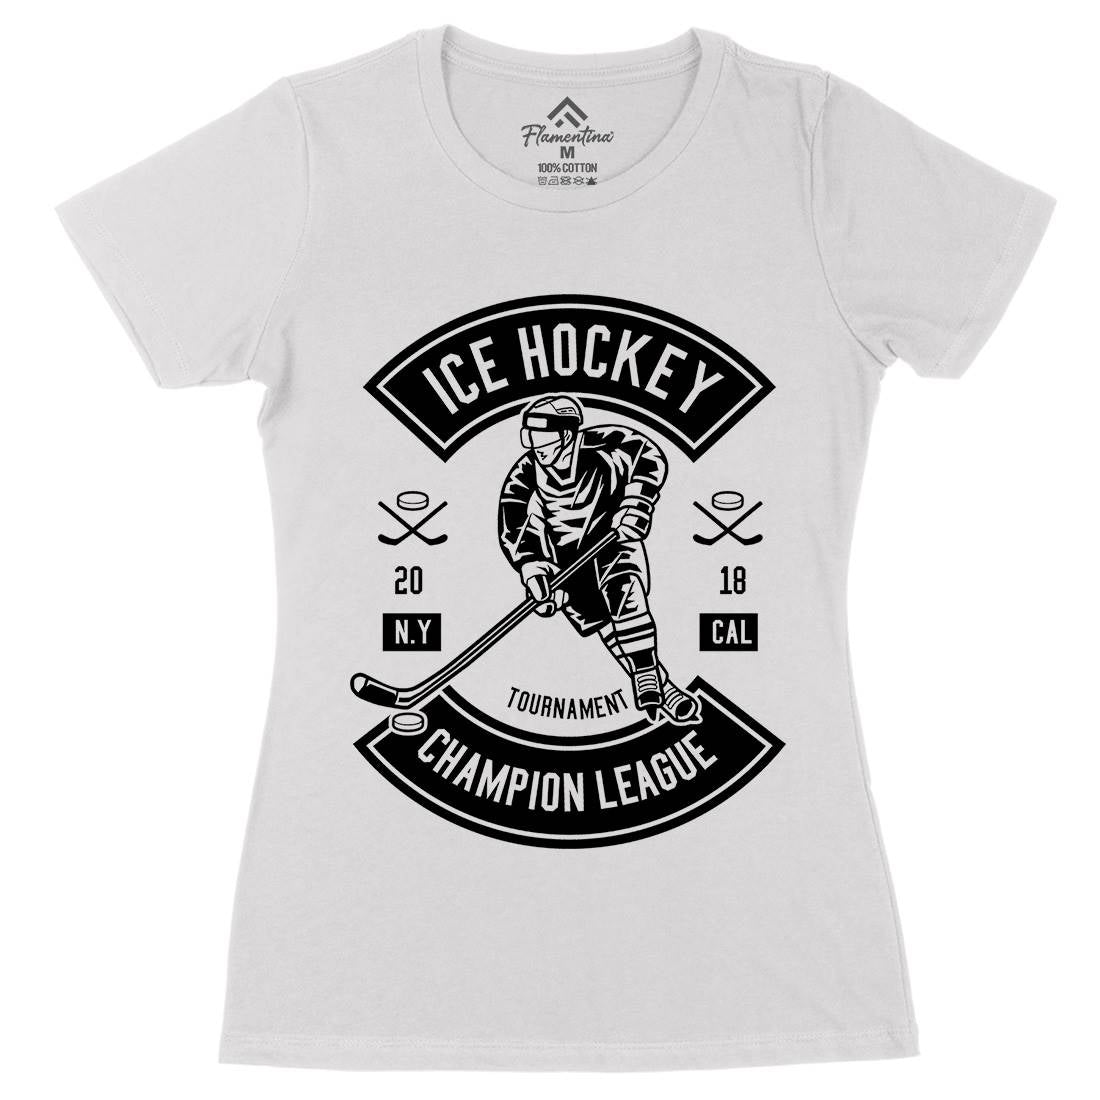 Ice Hockey Champion League Womens Organic Crew Neck T-Shirt Sport B564